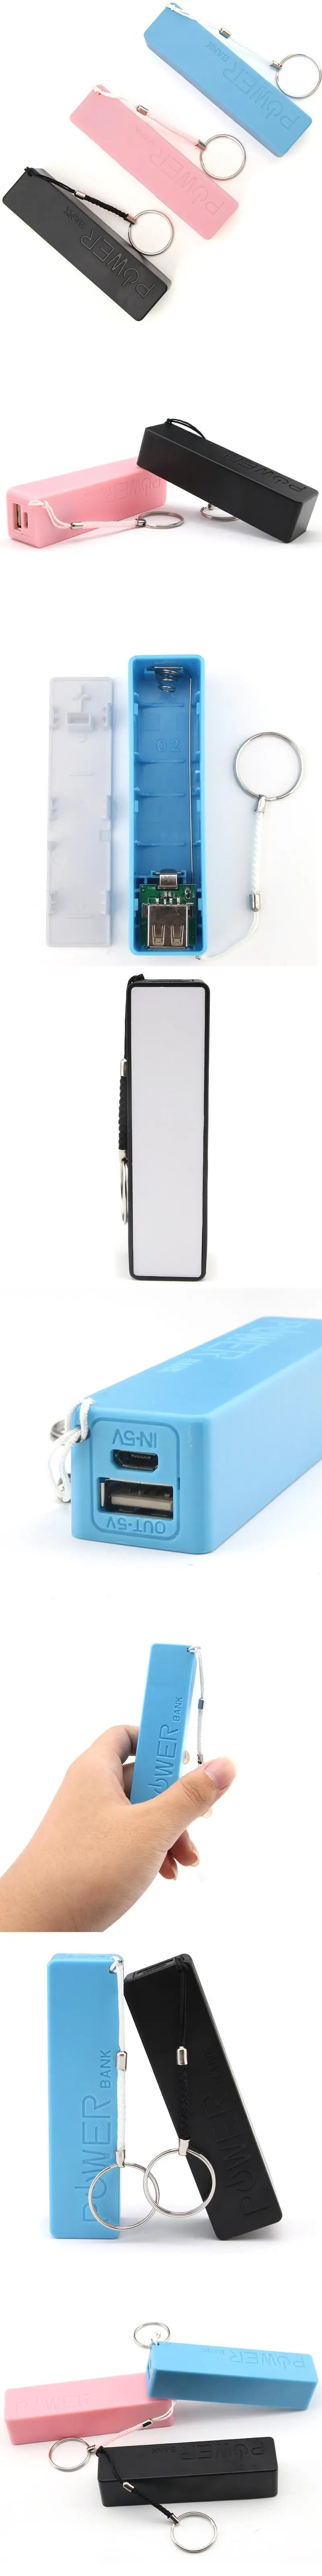 2600mAh портативное Внешнее зарядное usb-устройство для аккумулятора, внешний аккумулятор для сотового телефона, Usb аккумулятор, Внешнее зарядное устройство для телефона